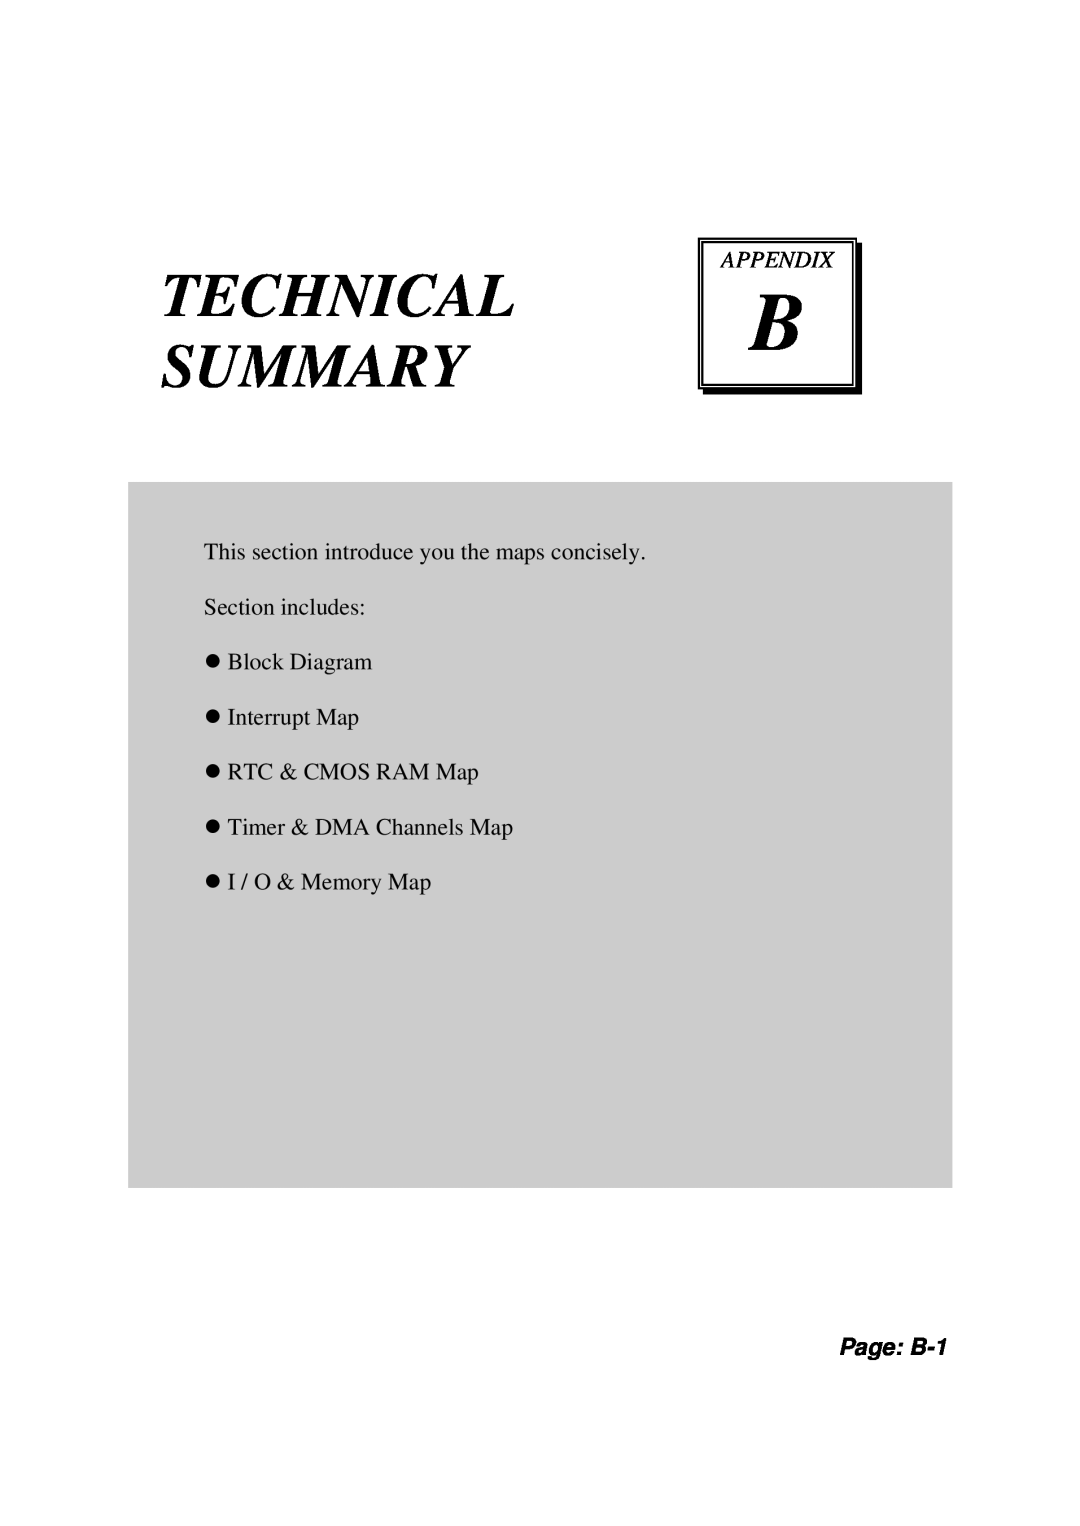 Intel PMB-601LF user manual Technical Summary, Page: B-1, Appendix 